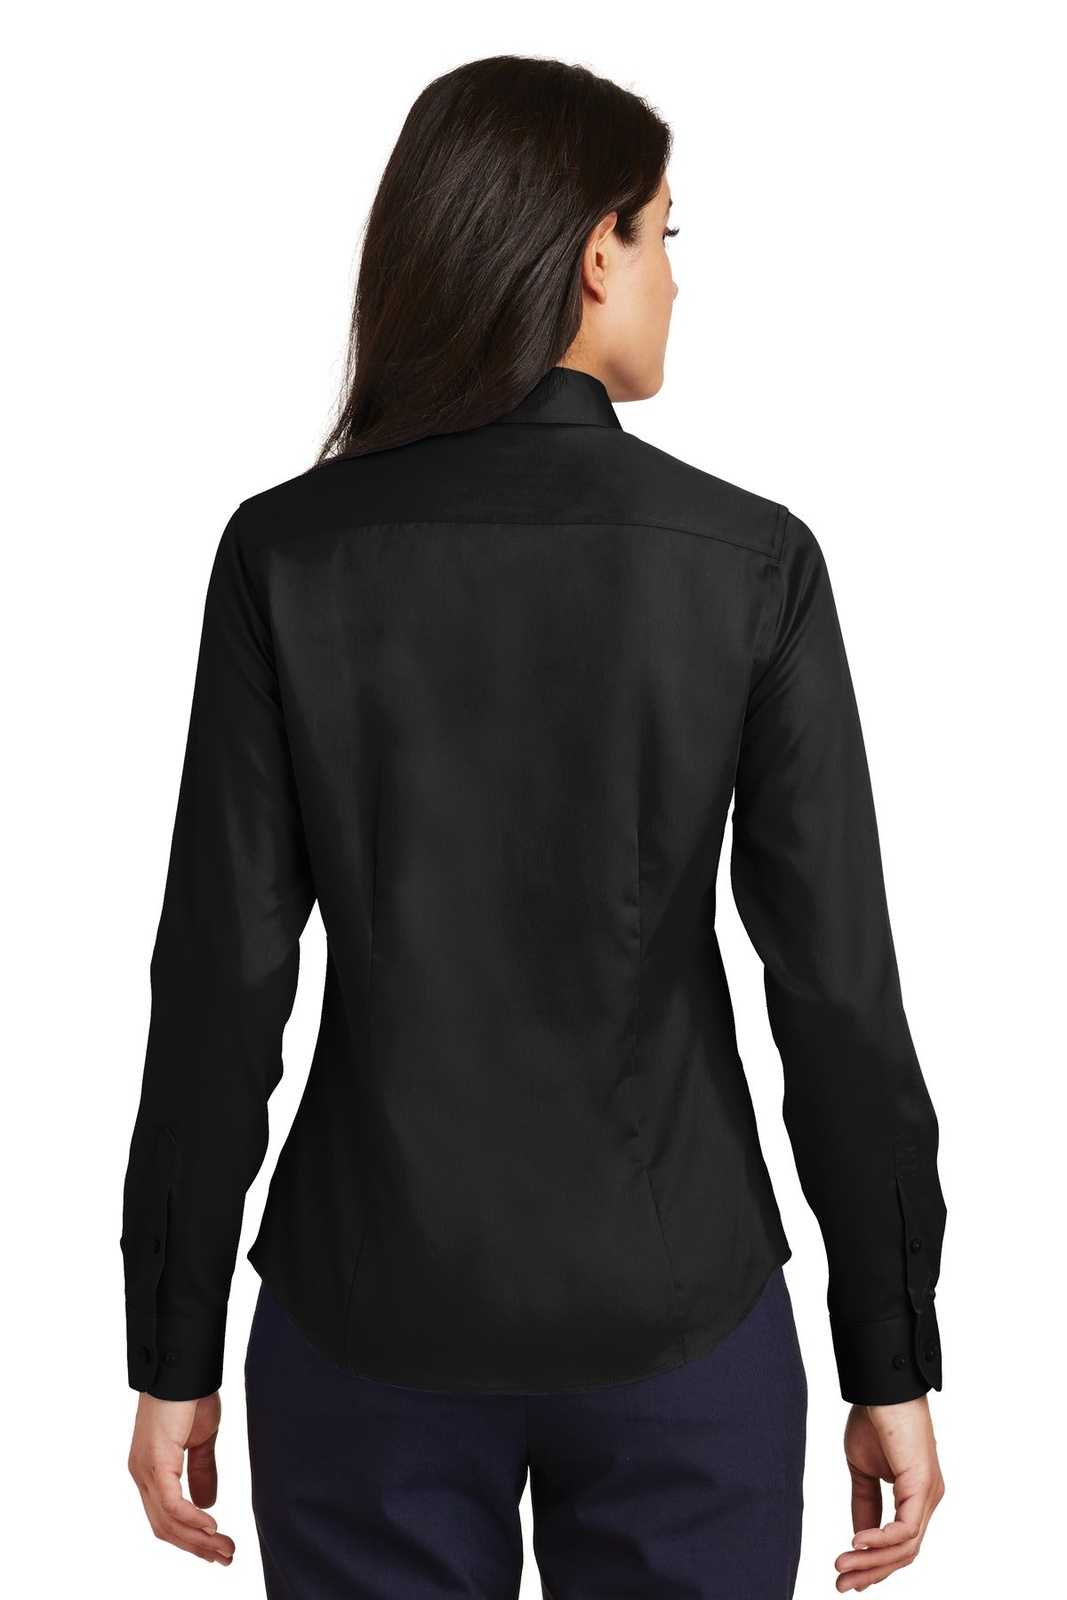 Port Authority L638 Ladies Non-Iron Twill Shirt - Black - HIT a Double - 1